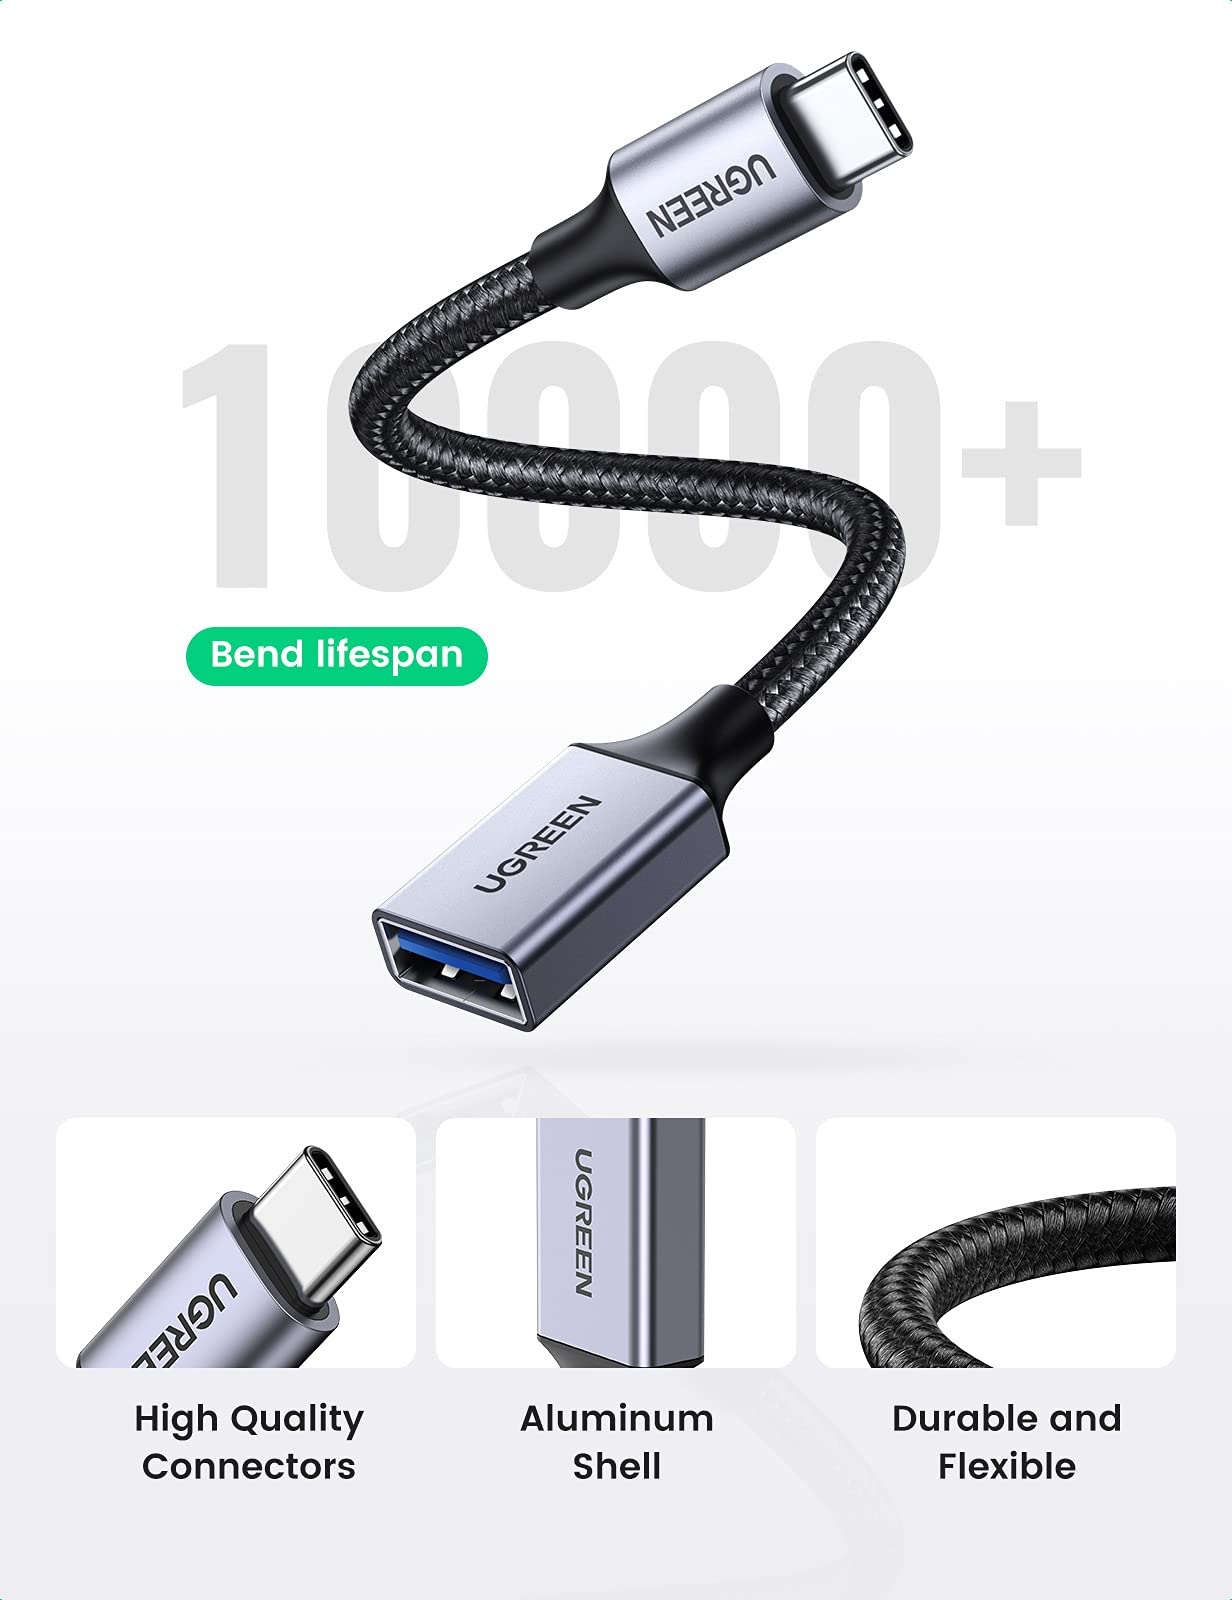 UGreen USB C Female to USB 3.0 Male Adapter, US276